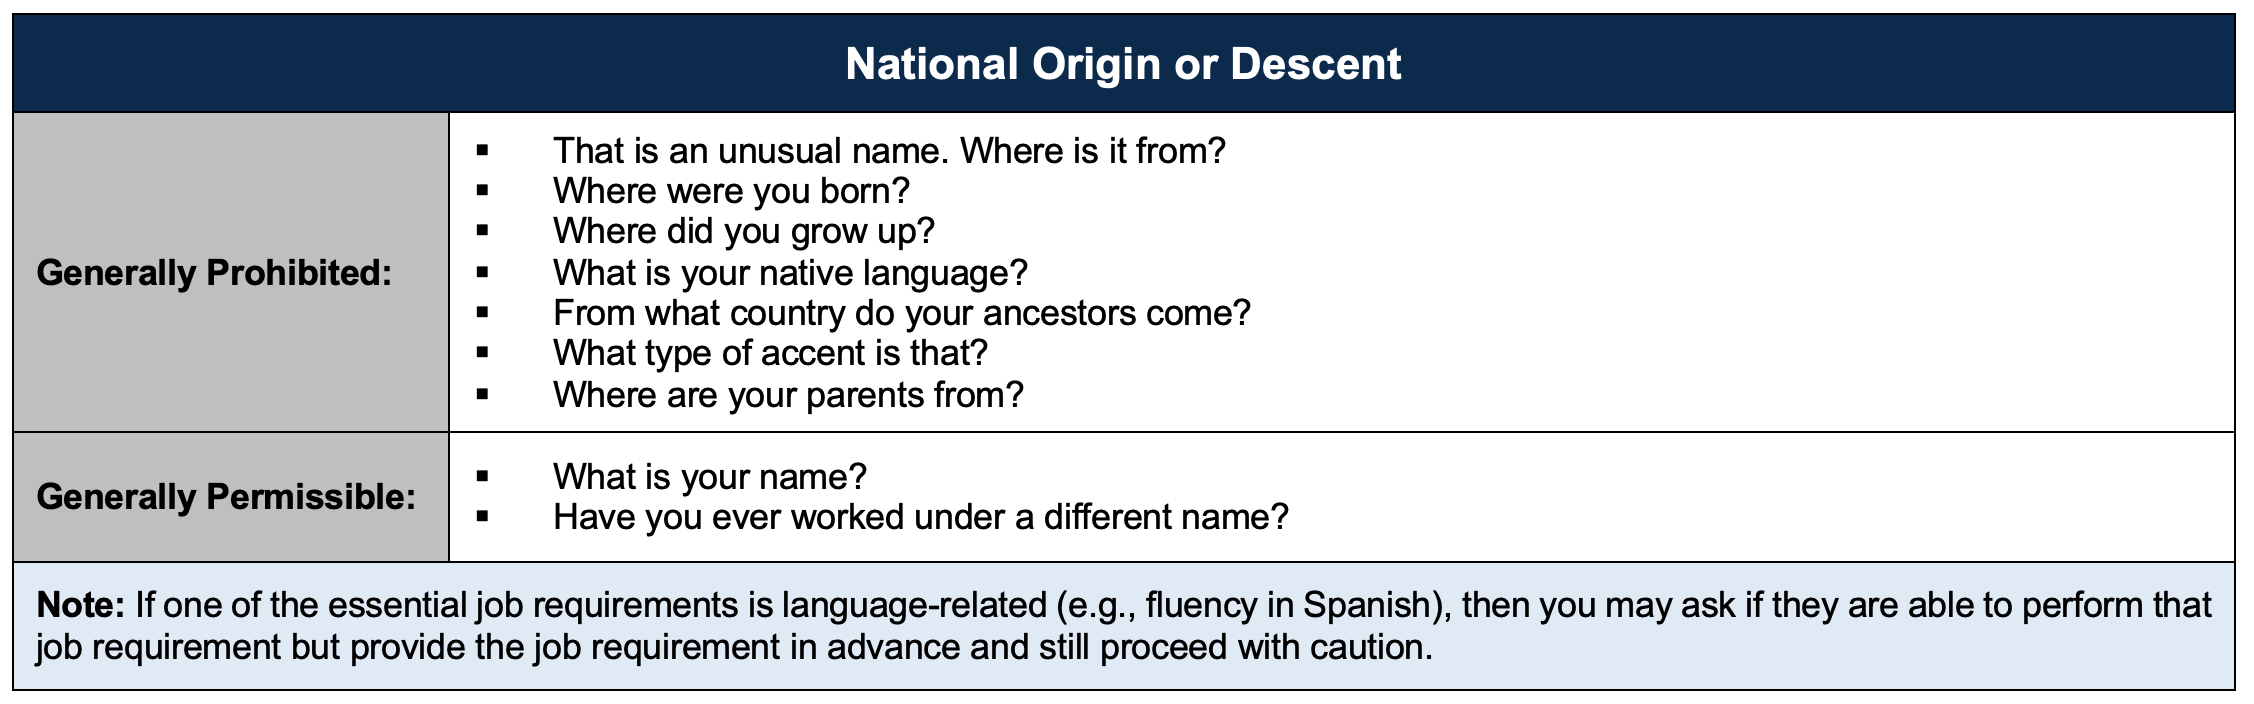 National Origin or Descent